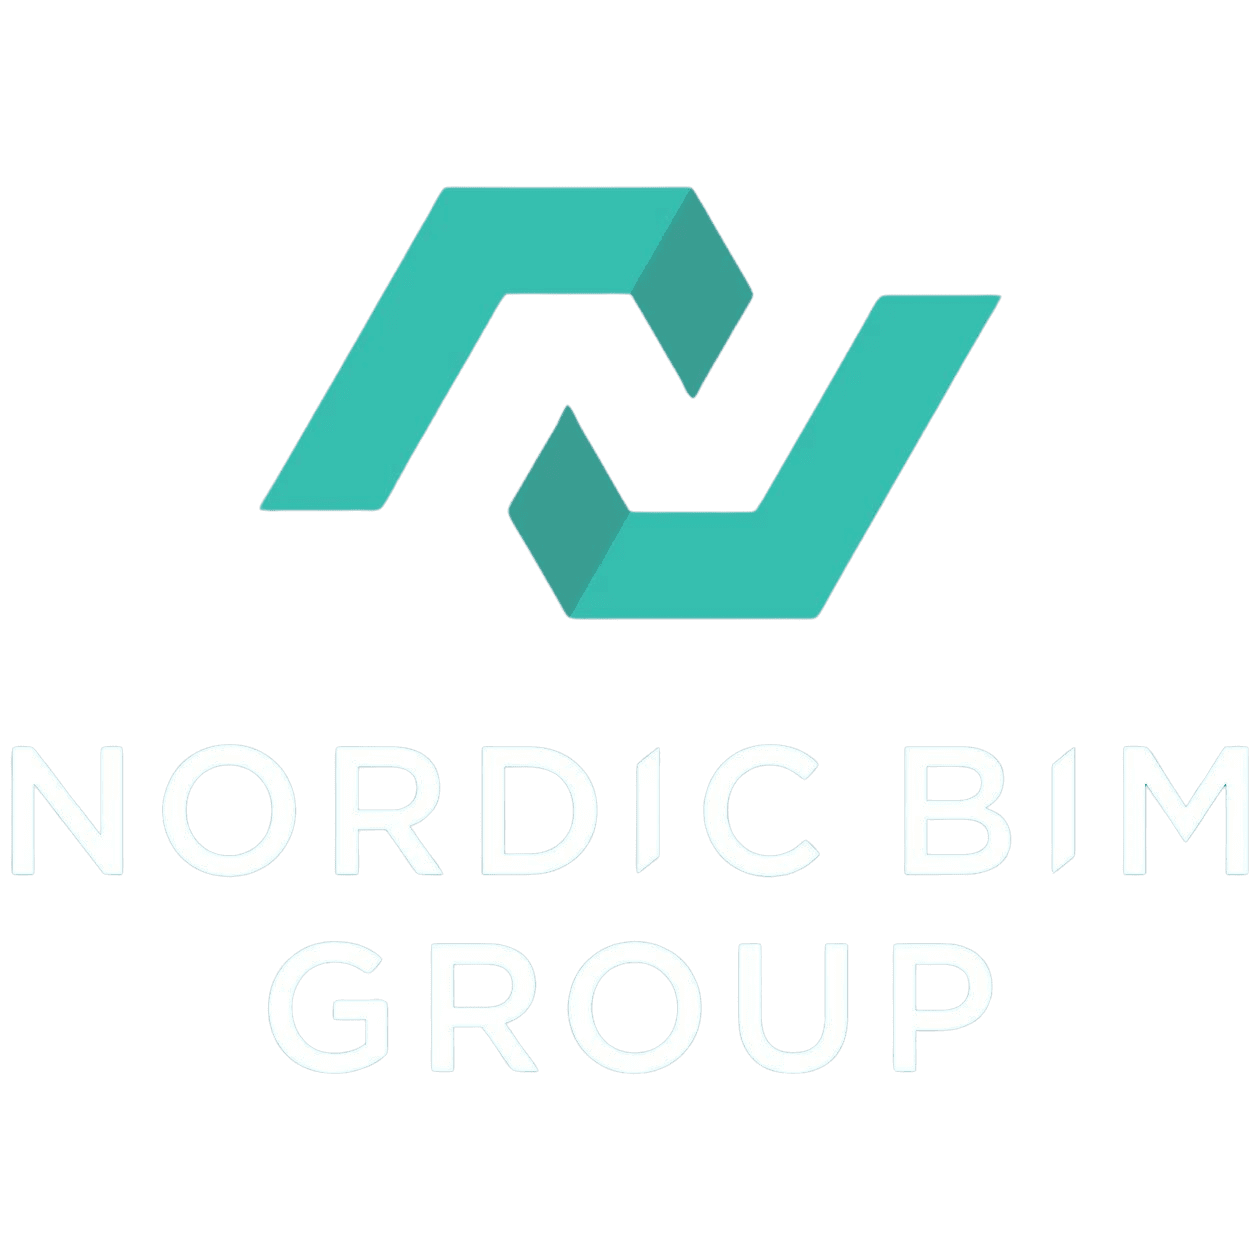 Nordic BIM Group